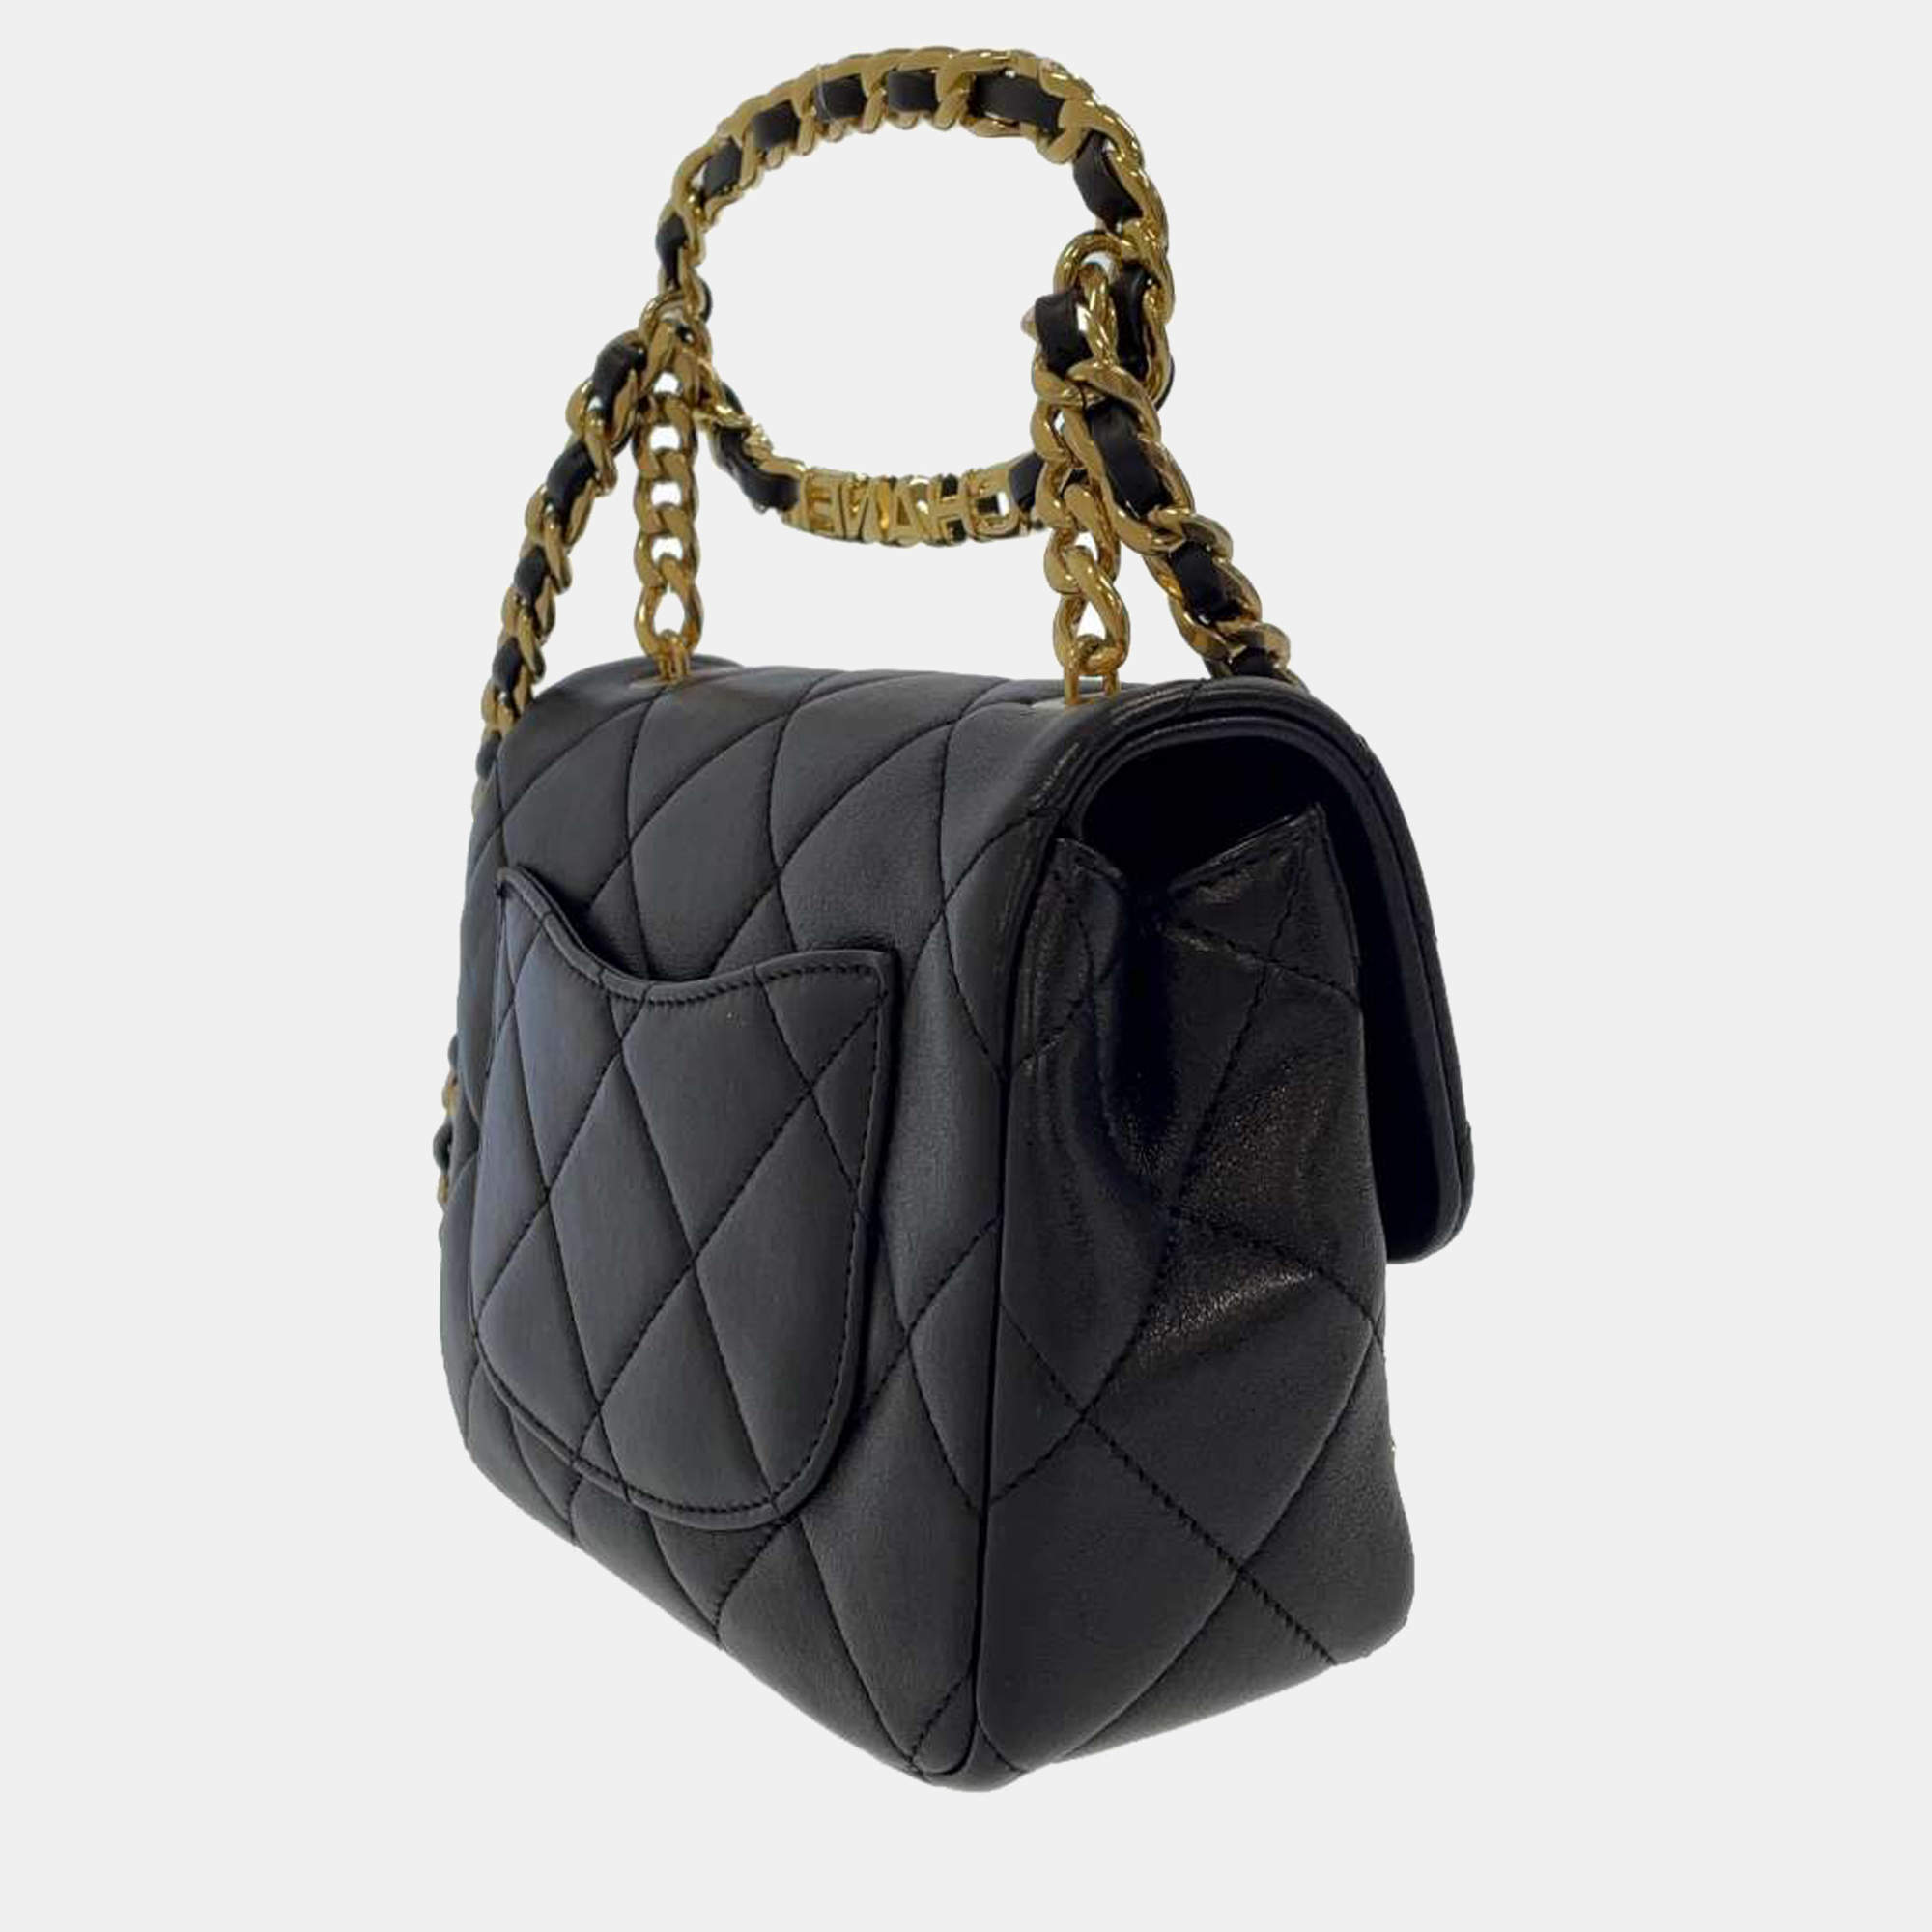 Luxury & Designer Bags for Sale - New Arrivals